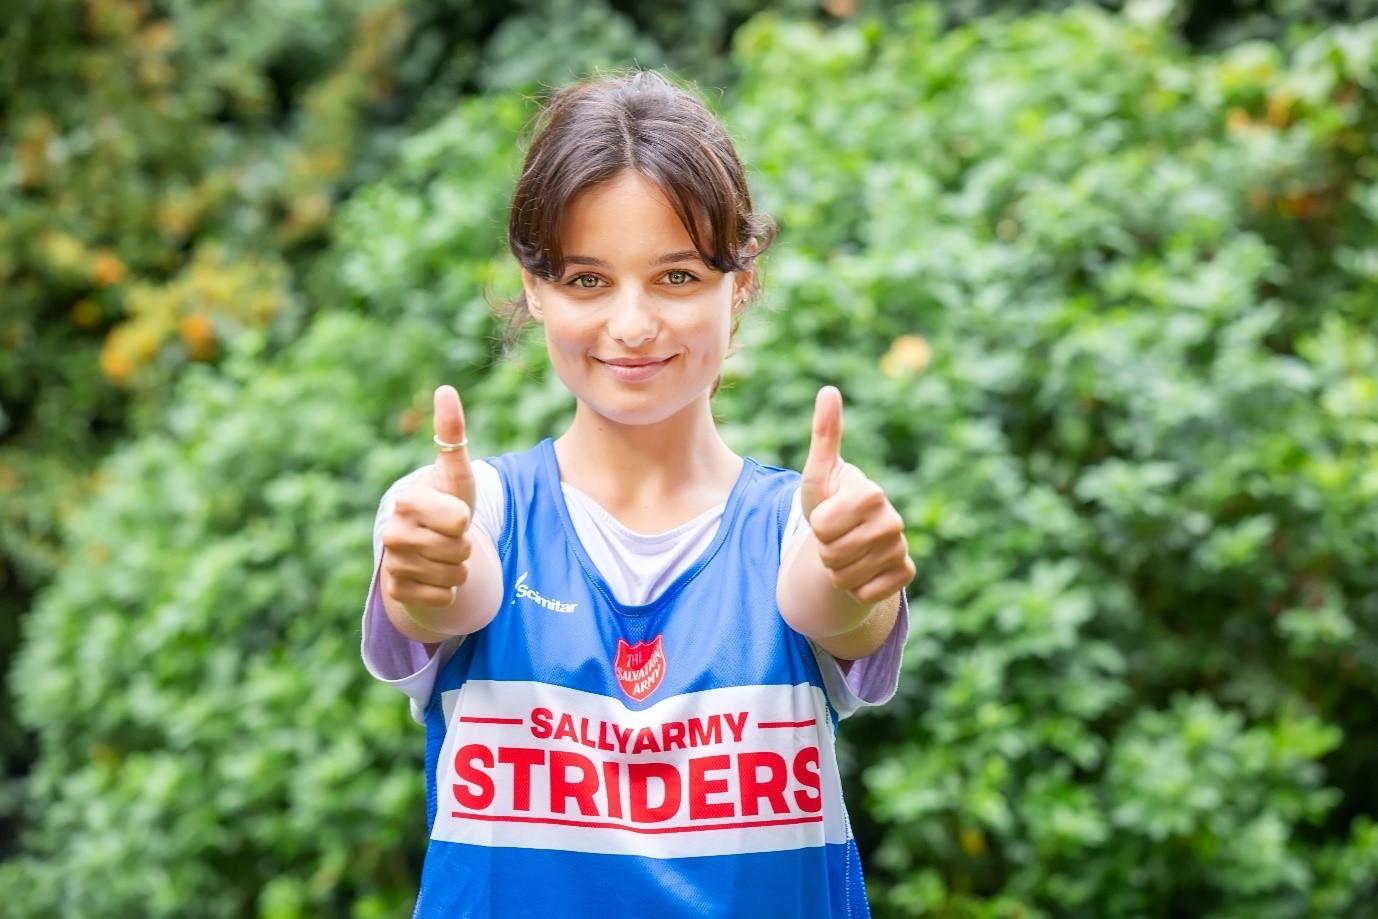 Ruxandra running for Salvation Army at the London marathon